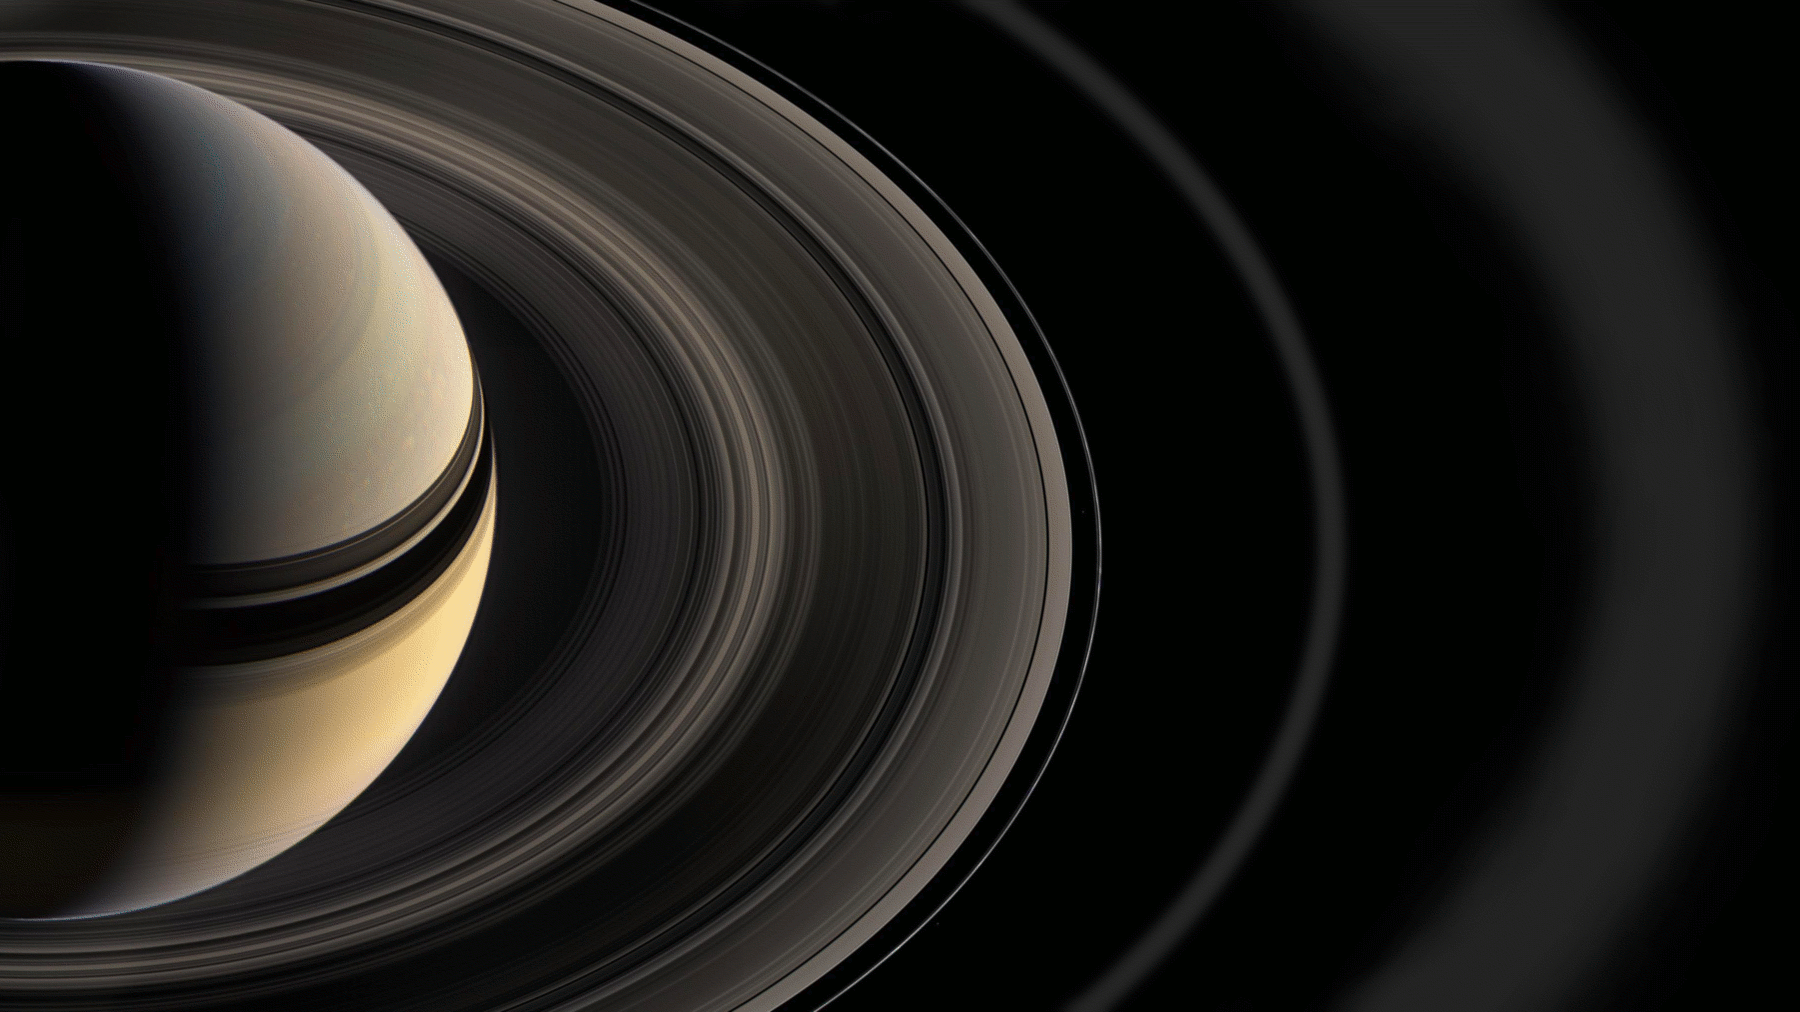 Cassini Spacecraft Begins Dramatic, ‘Ring-Grazing’ Orbits Today